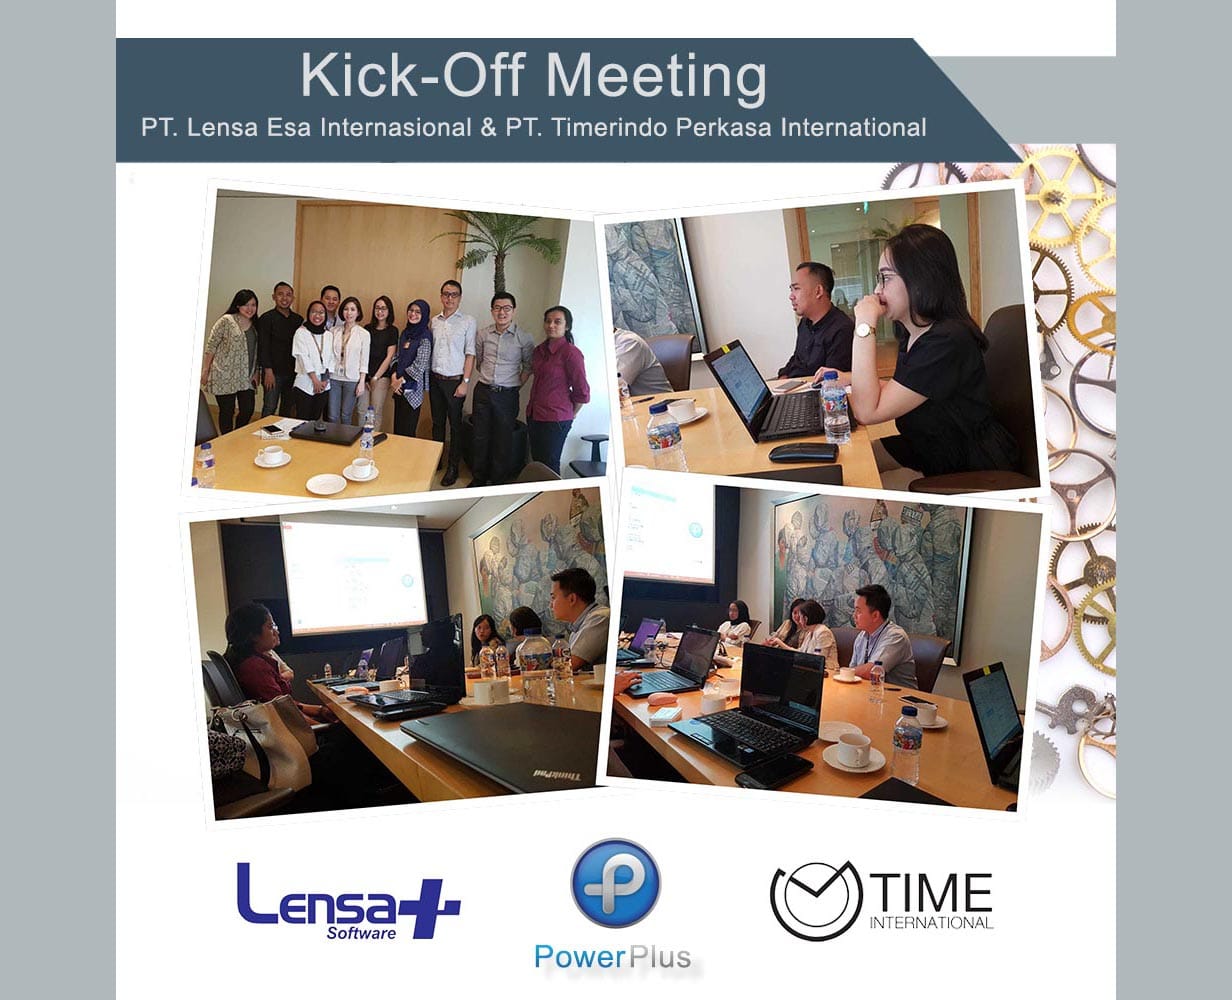 Kick-off Meeting PT. Lensa Esa Internasional & PT. Timerindo Perkasa International